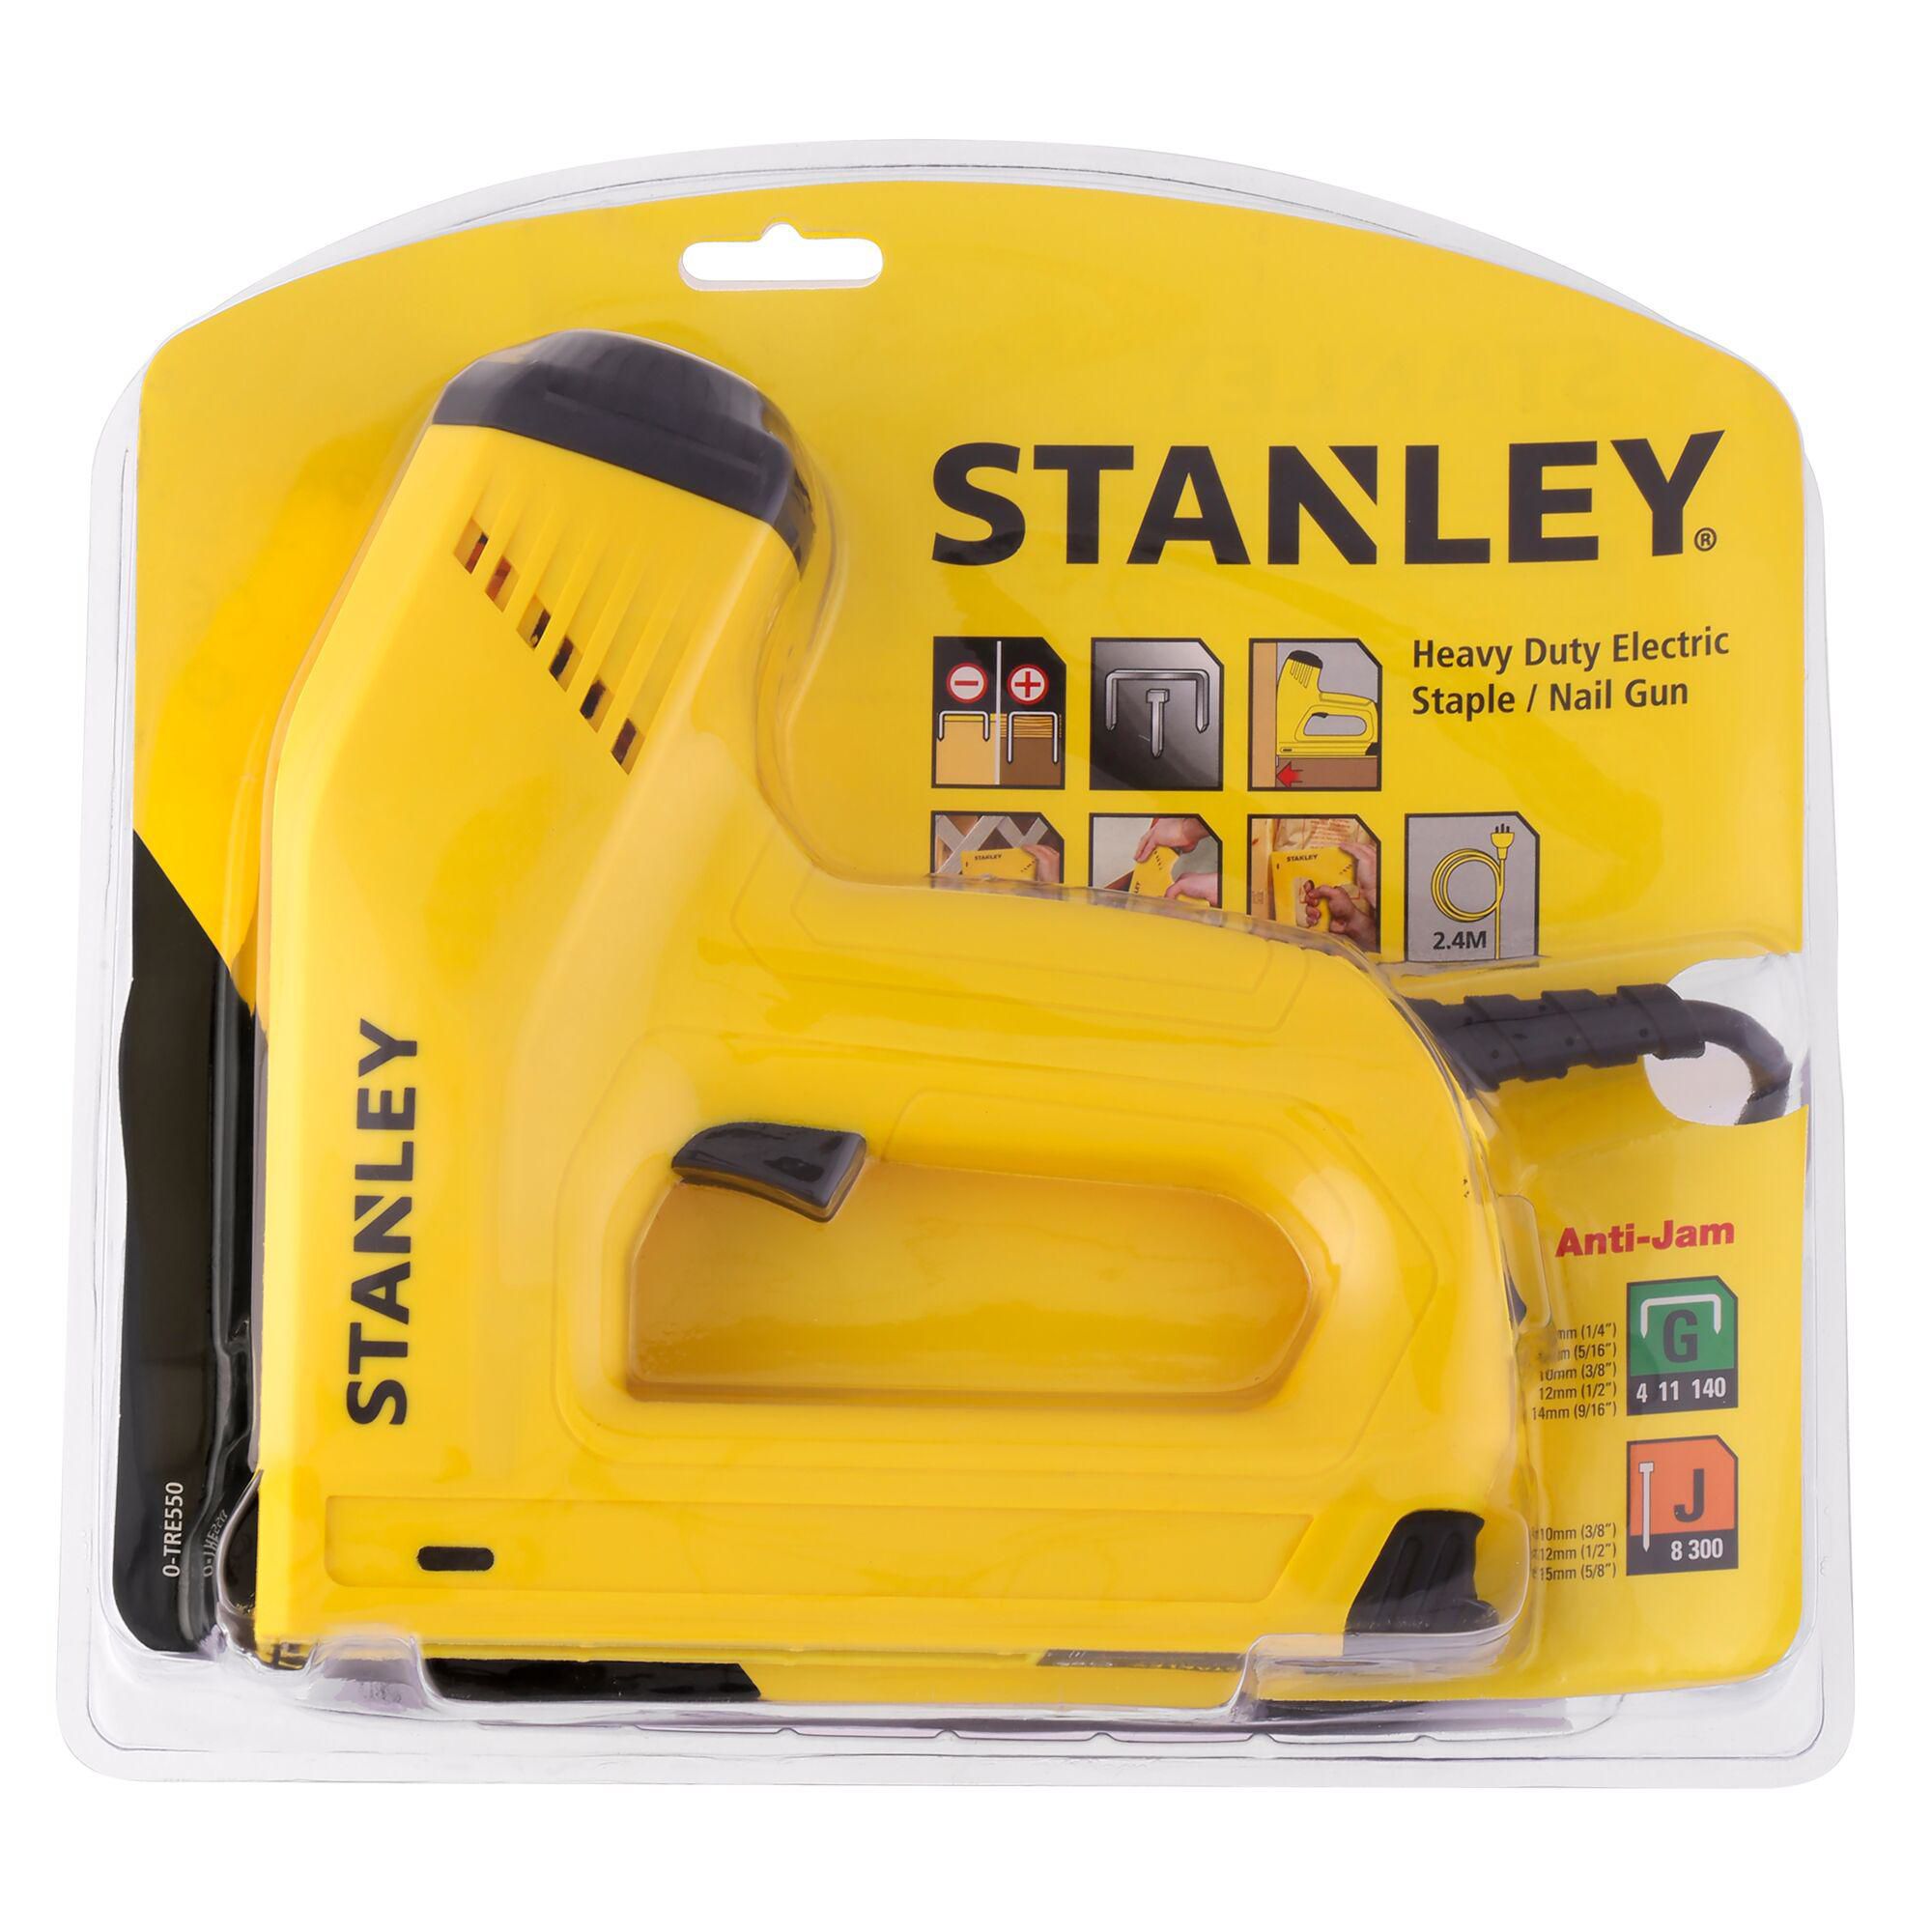 günstigen Preisen erhältlich. Stanley 240V 15mm Corded Nailer B&Q | 0-TRE550 DIY at